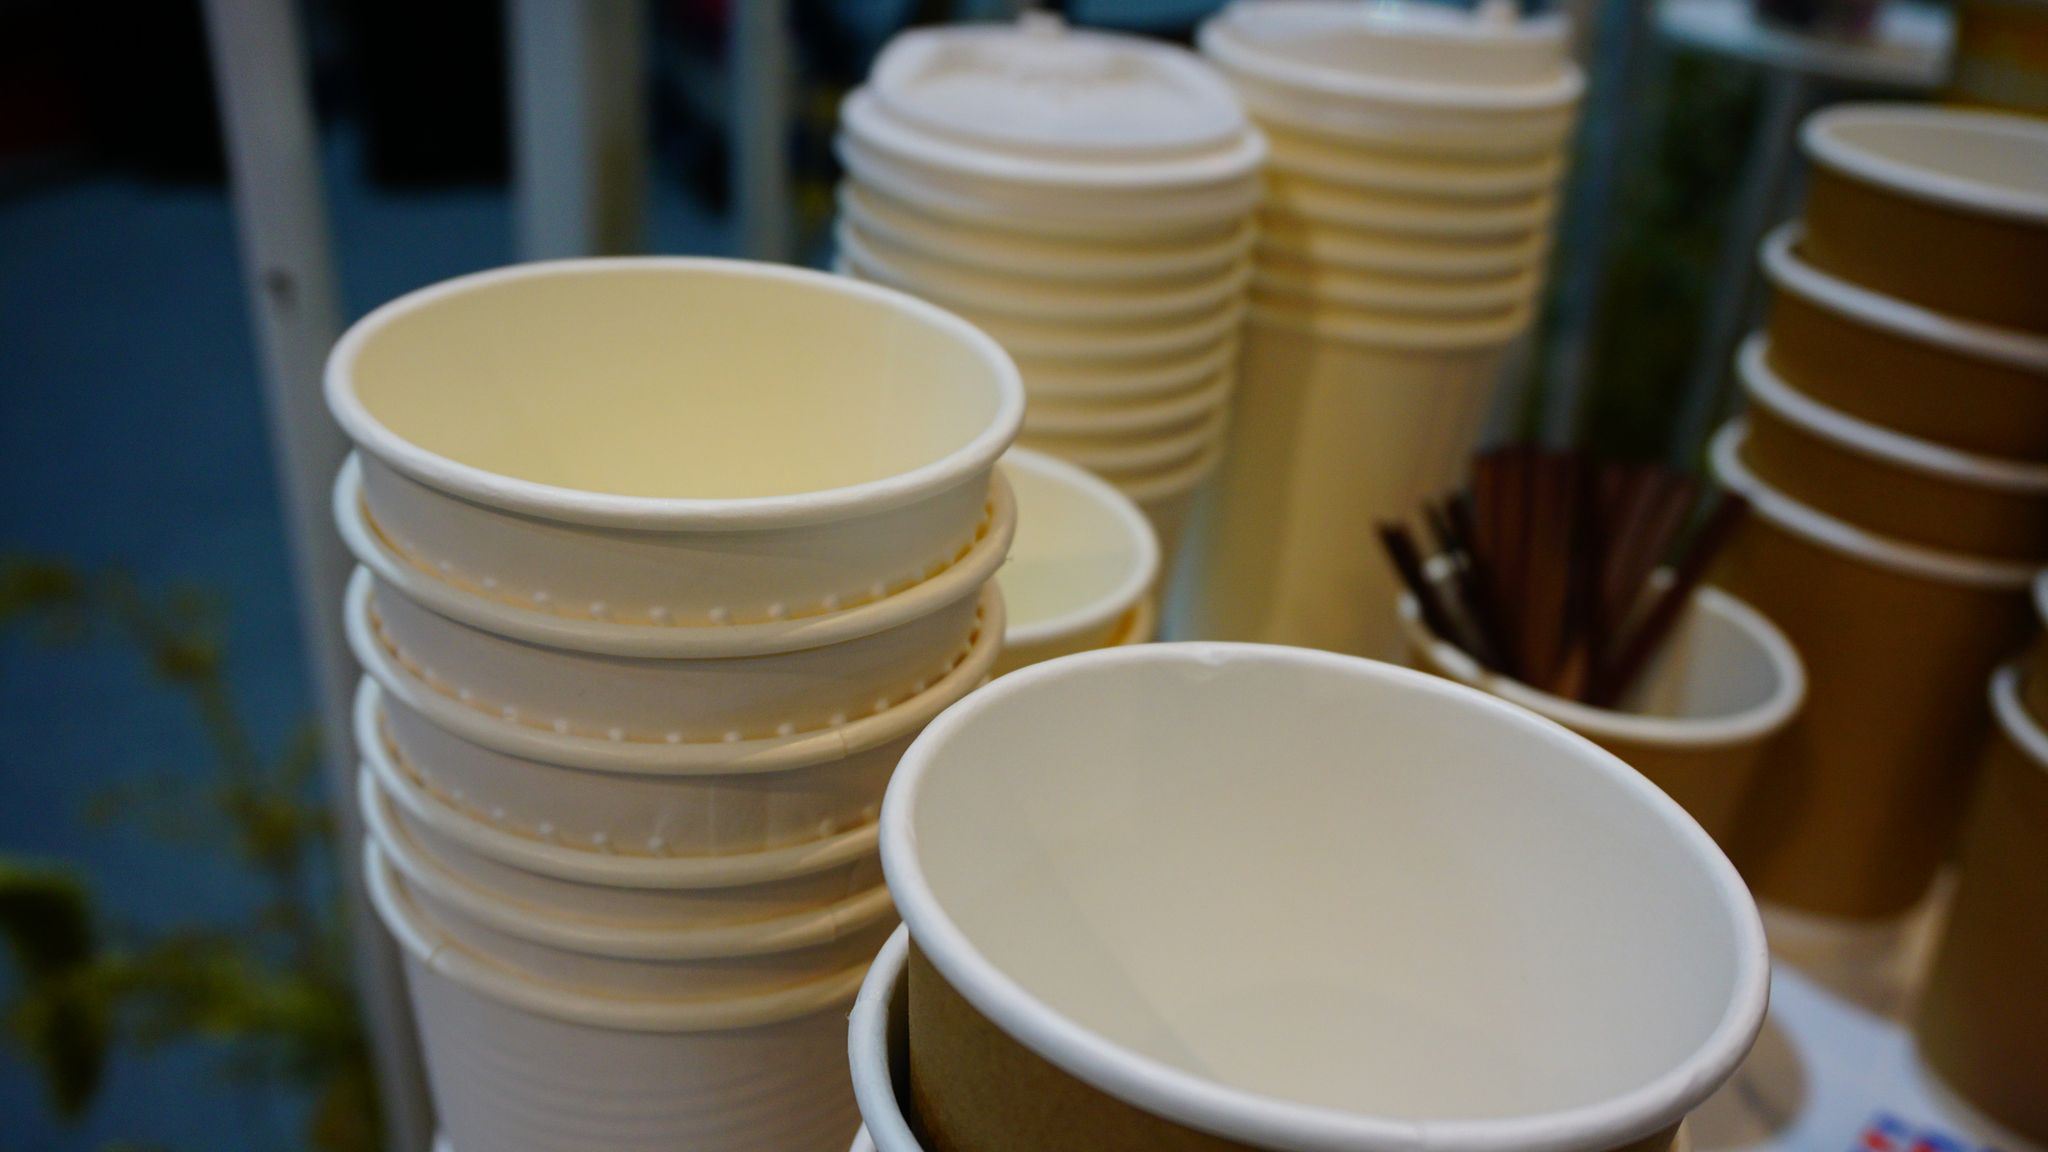 https://e3.365dm.com/17/11/2048x1152/skynews-coffee-cups-disposable-cups_4162310.jpg